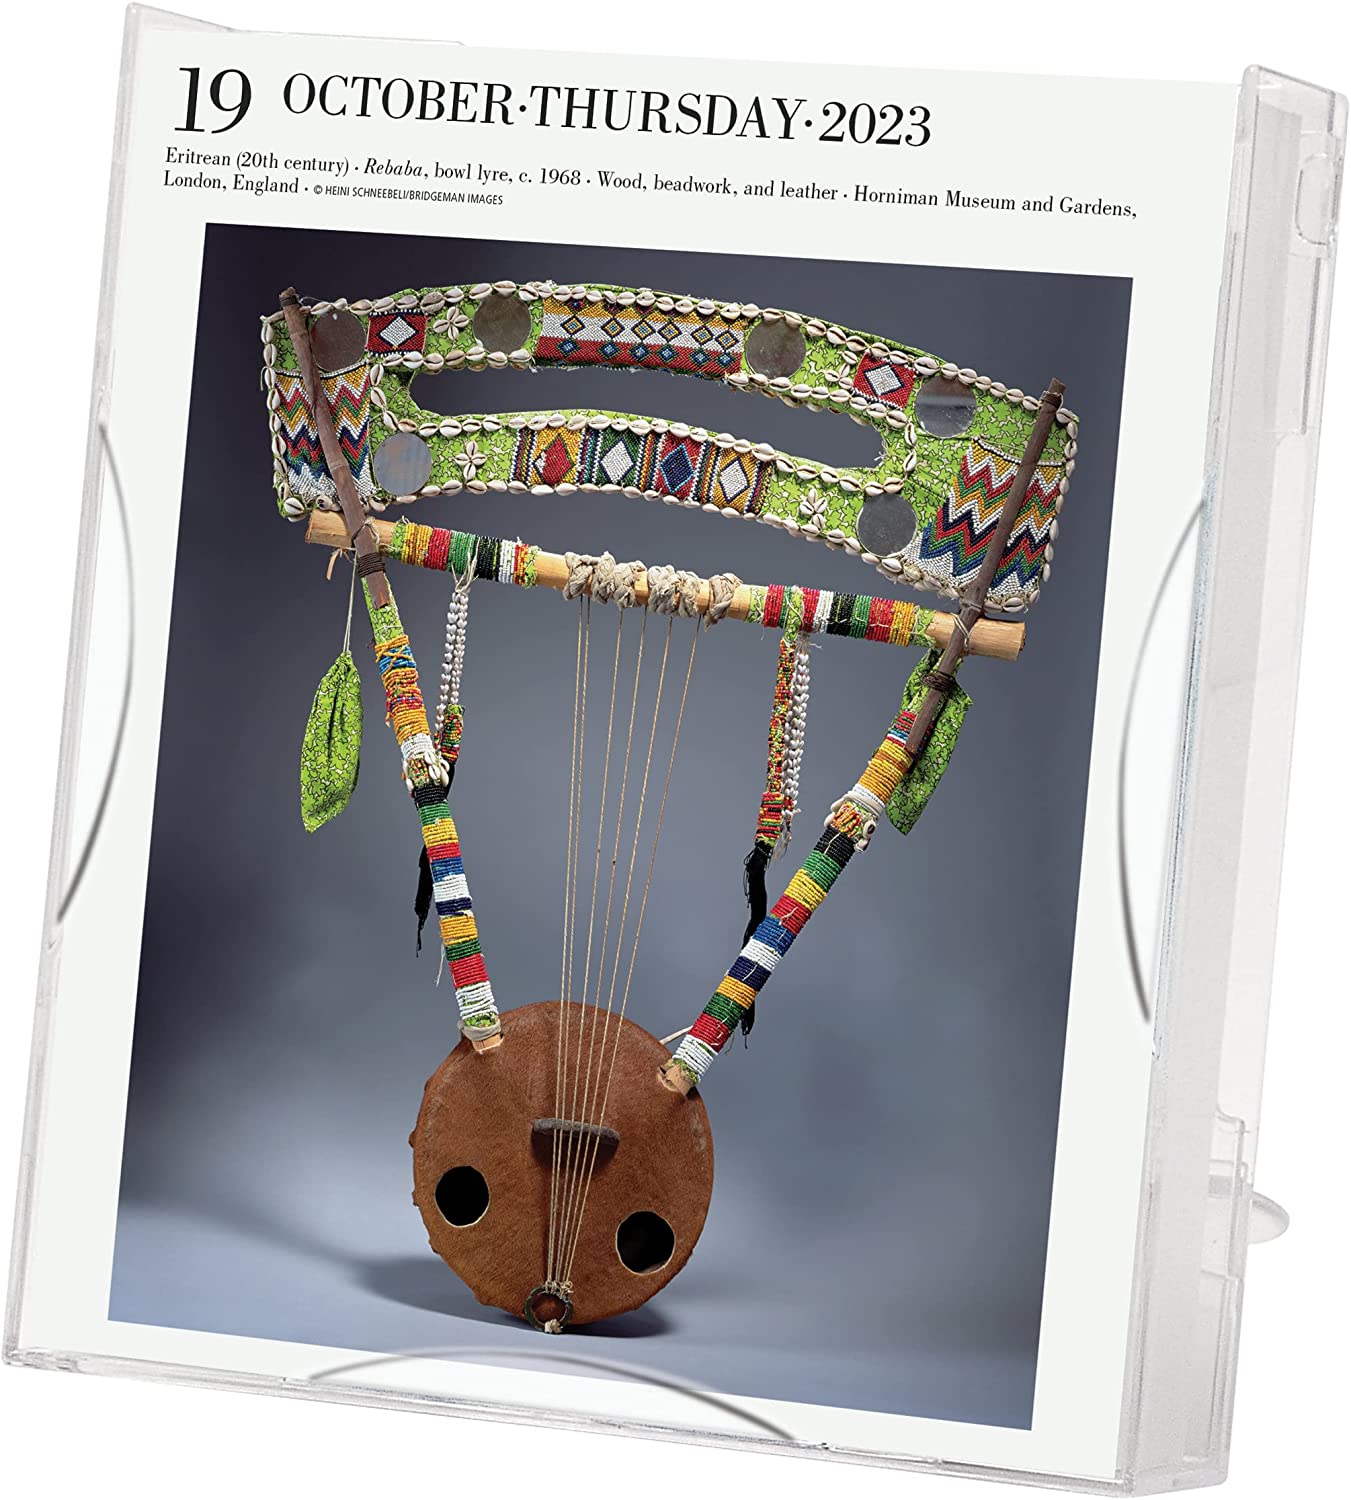 Calendar 2023 - Art - Page-A-Day Gallery Calendar - Workman Publishing